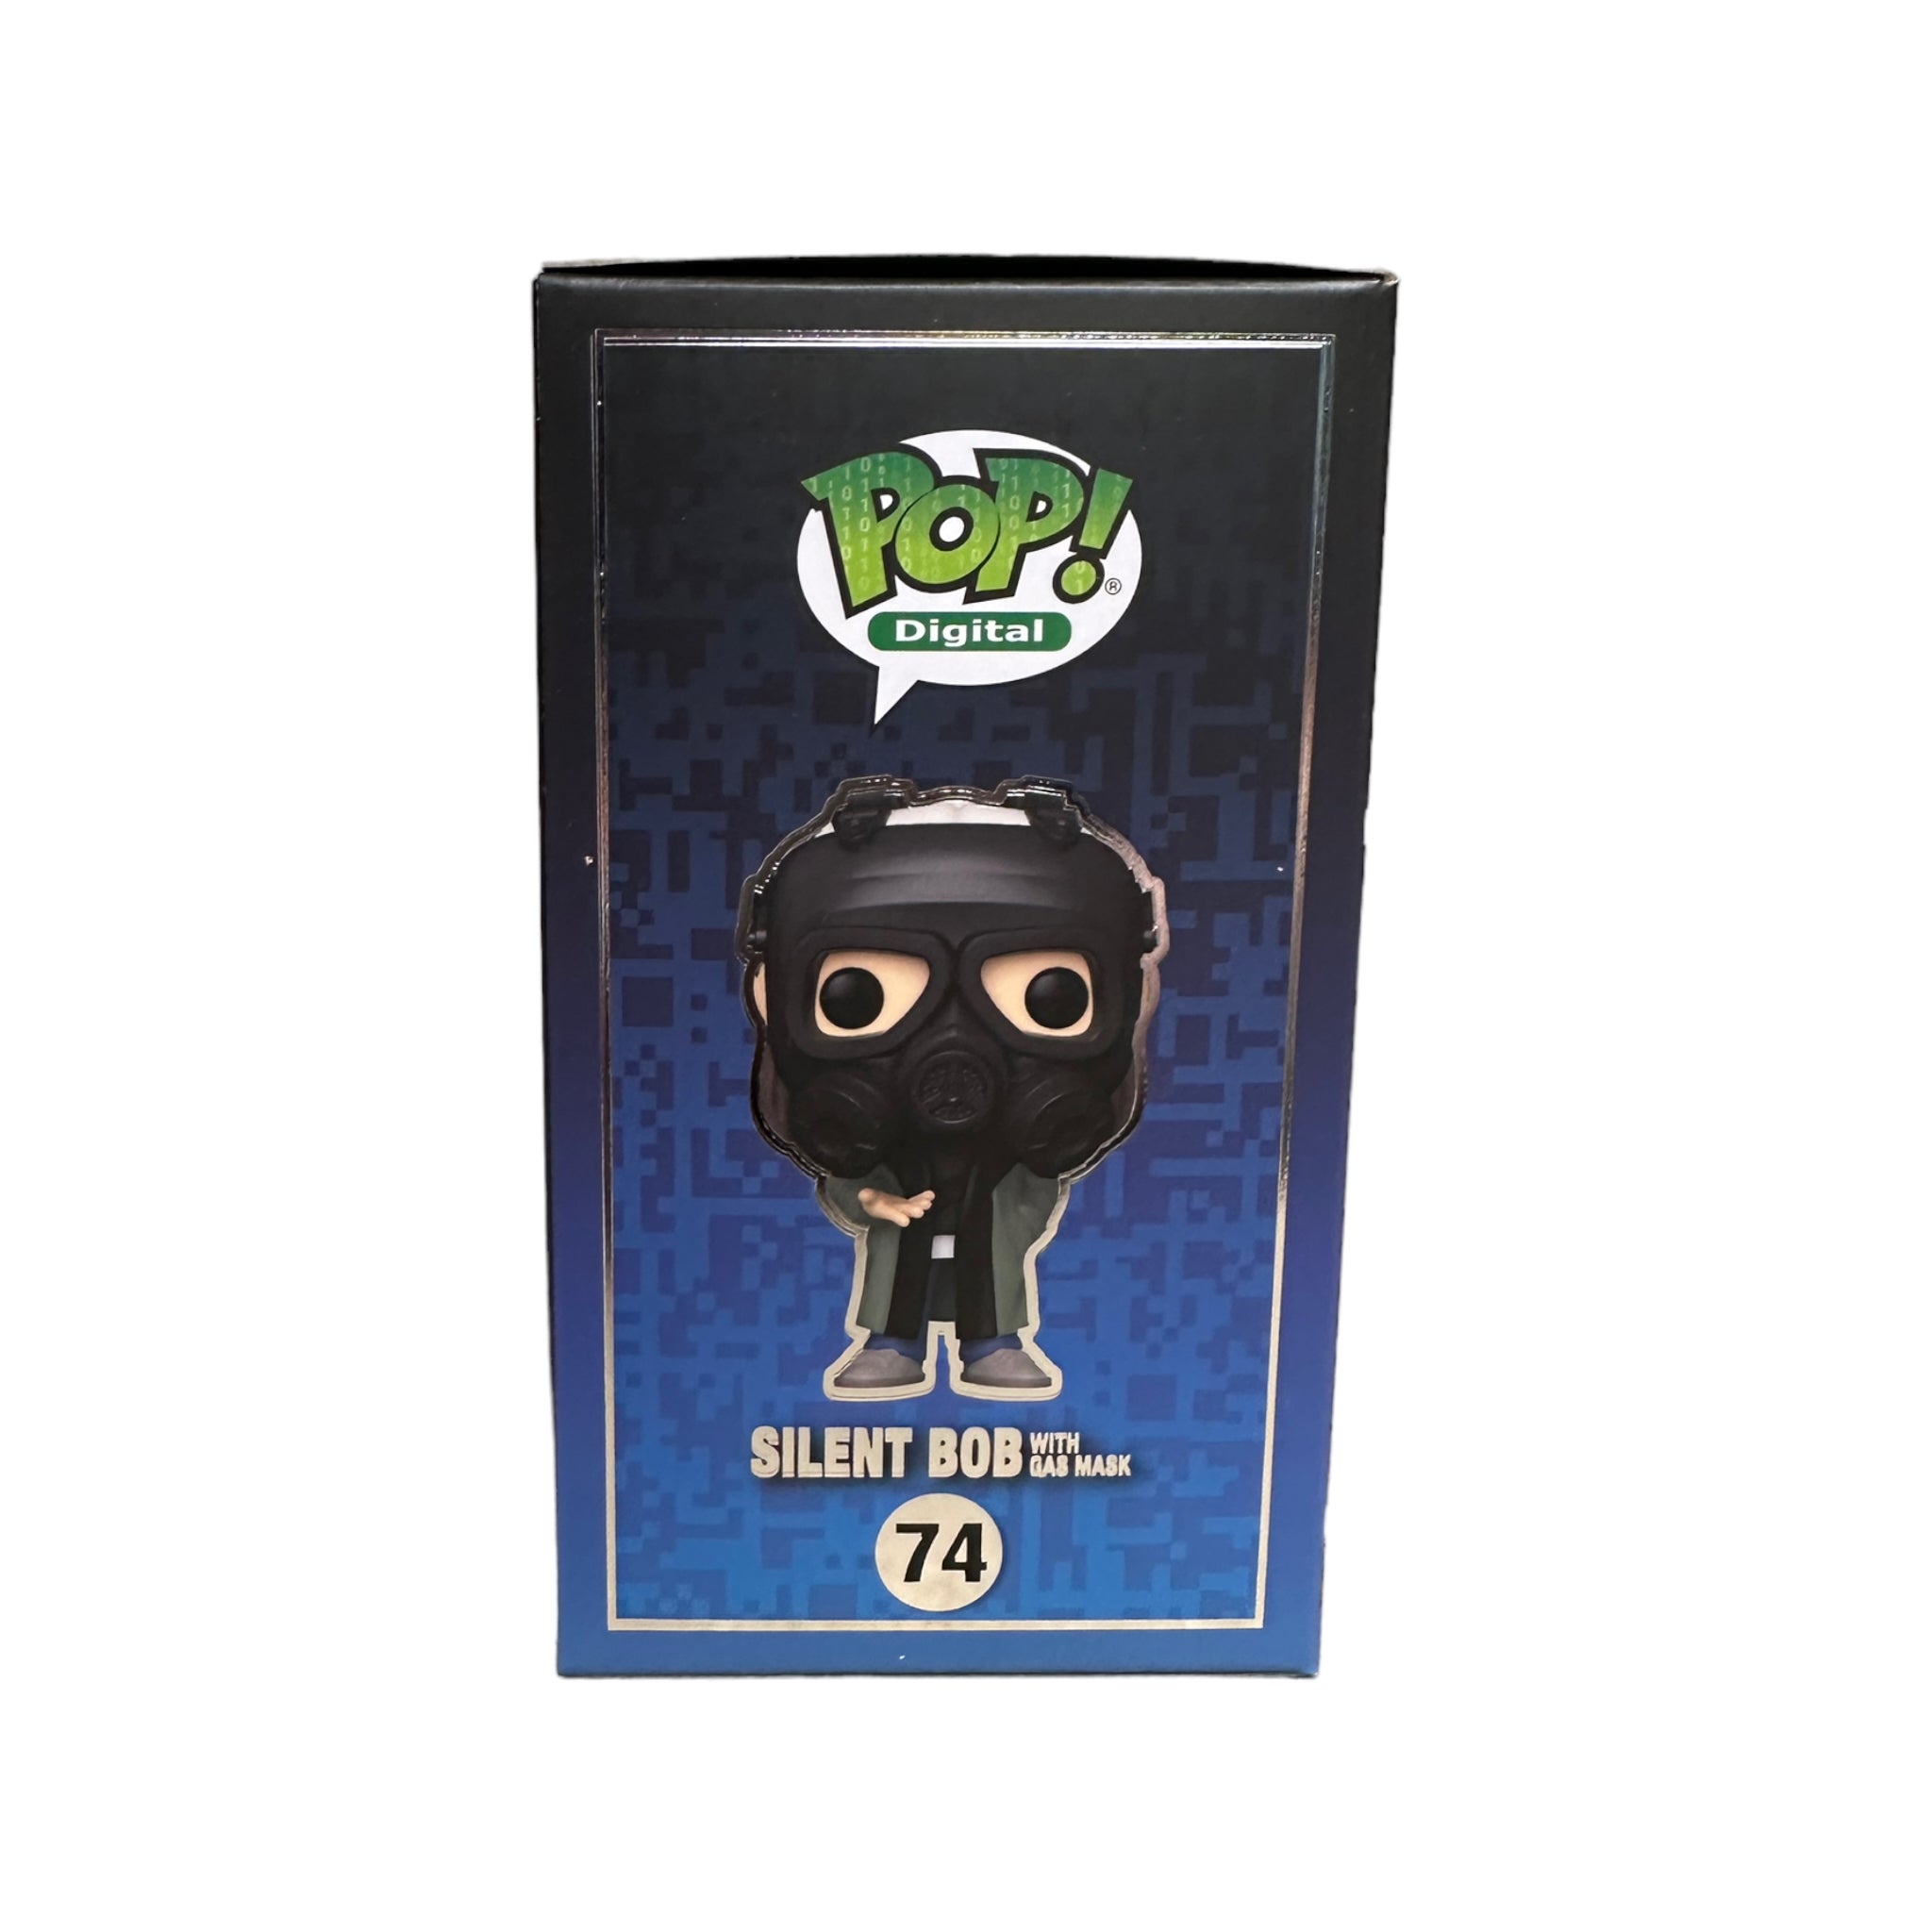 Silent Bob with Gas Mask #74 Funko Pop! - Jay & Silent Bob - NFT Release Exclusive LE999 Pcs - Condition 8.75/10